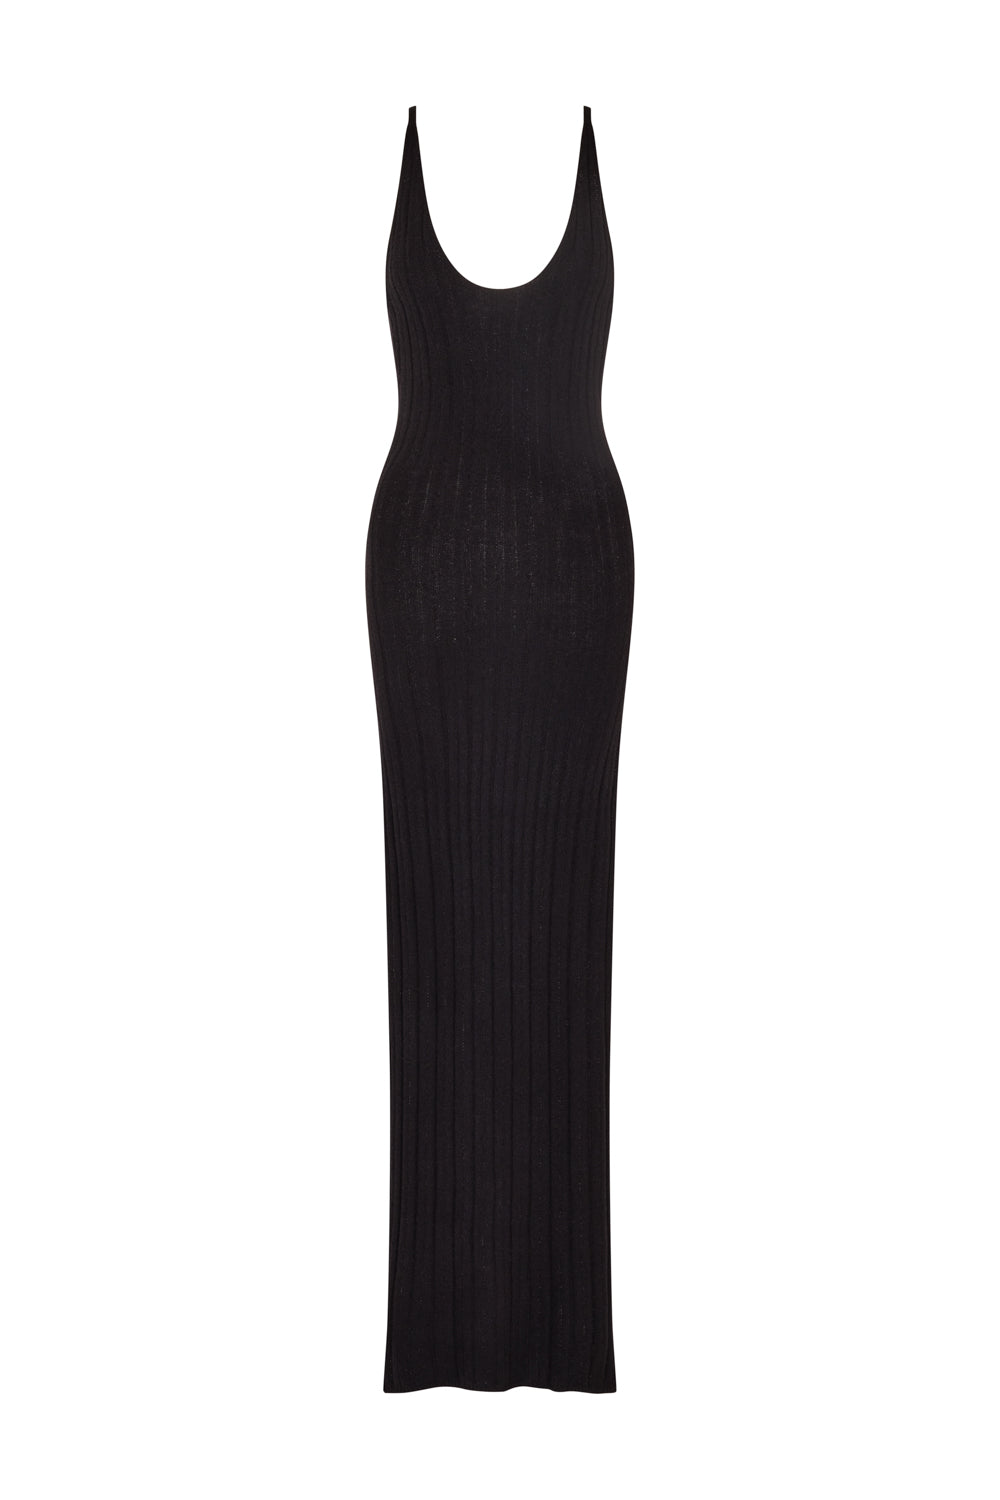 flook the label nova maxi dress black knit product detail front